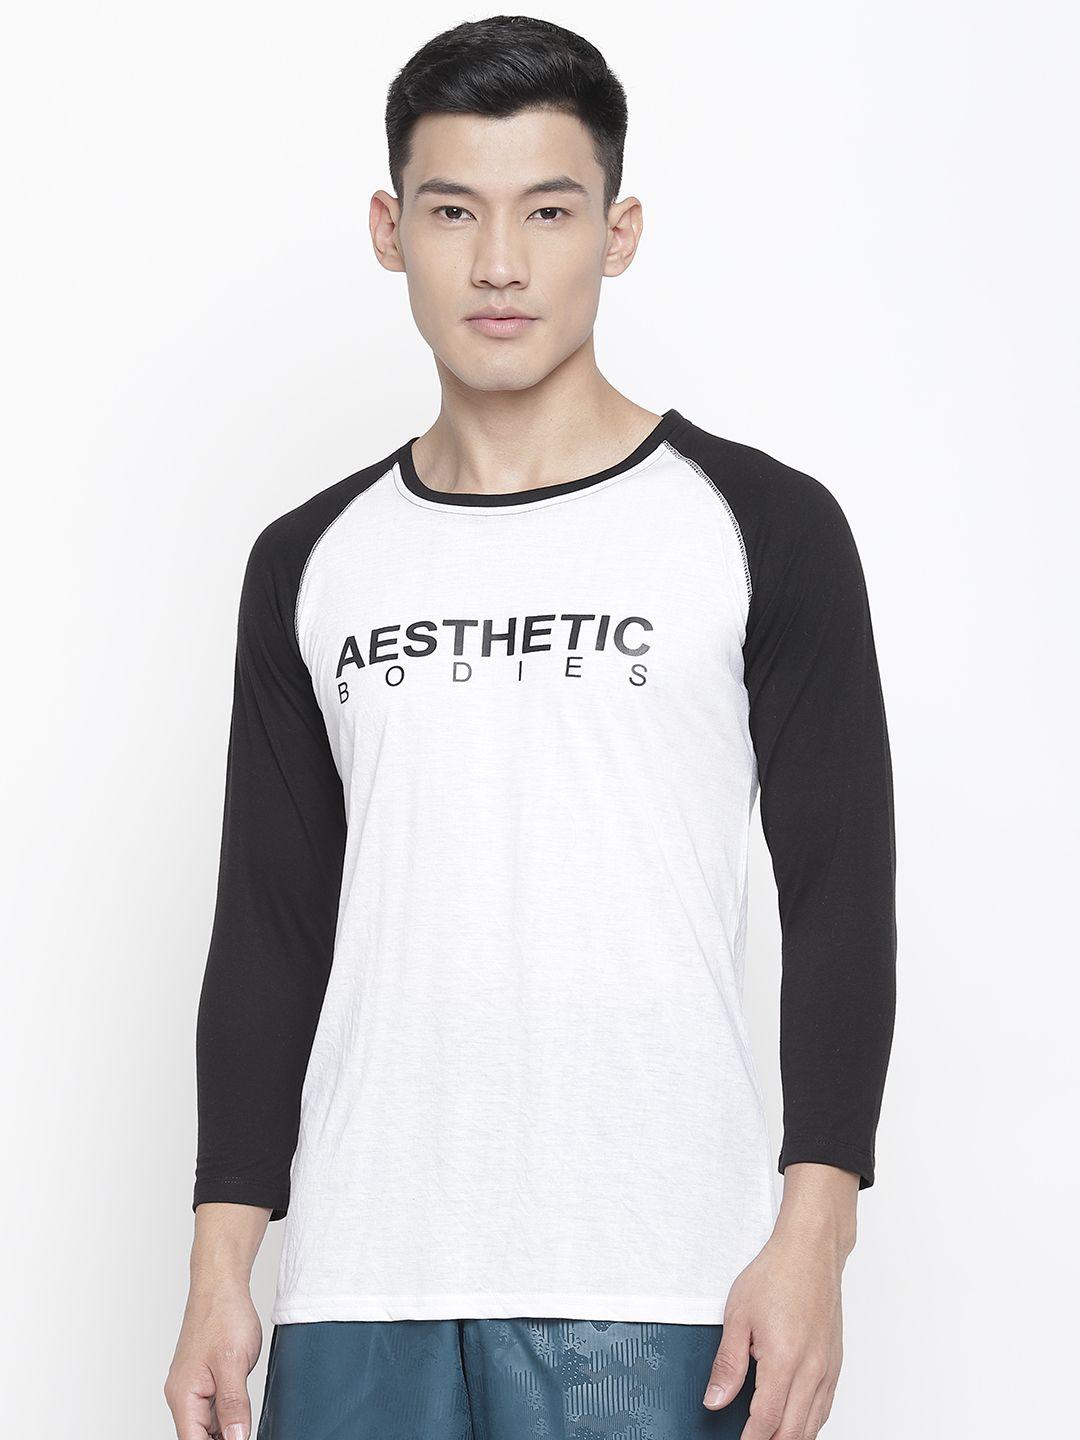 aesthetic bodies men white & black printed round neck t-shirt